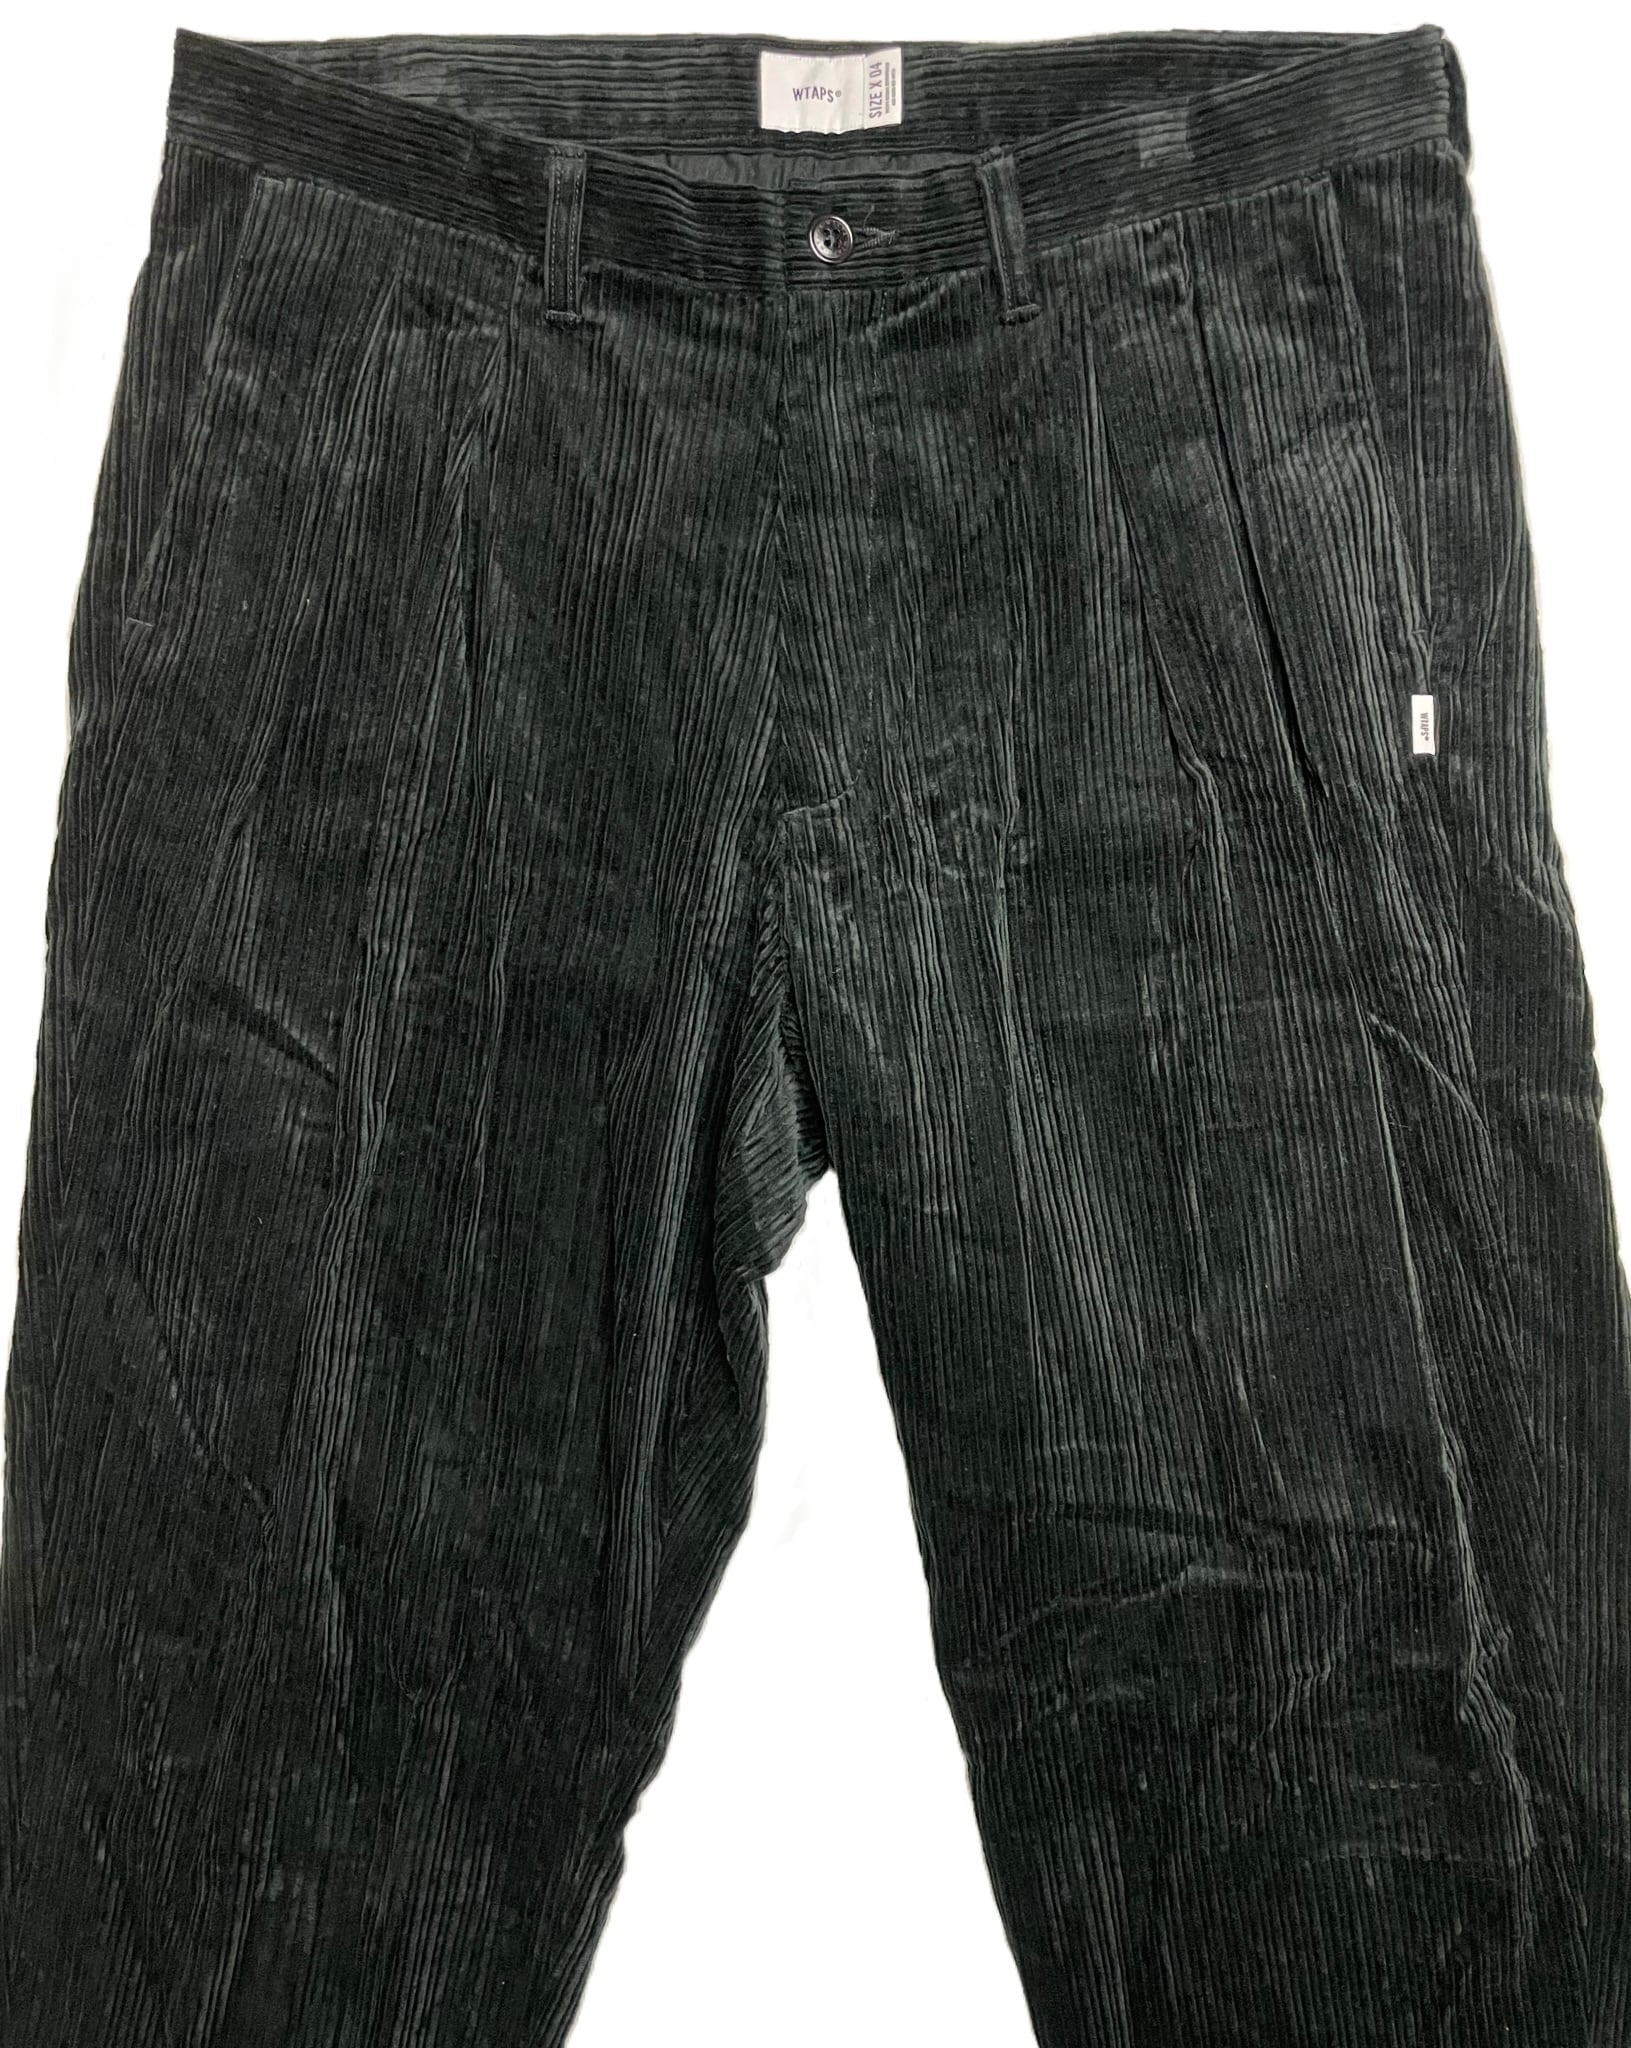 Wtaps pants black size 04